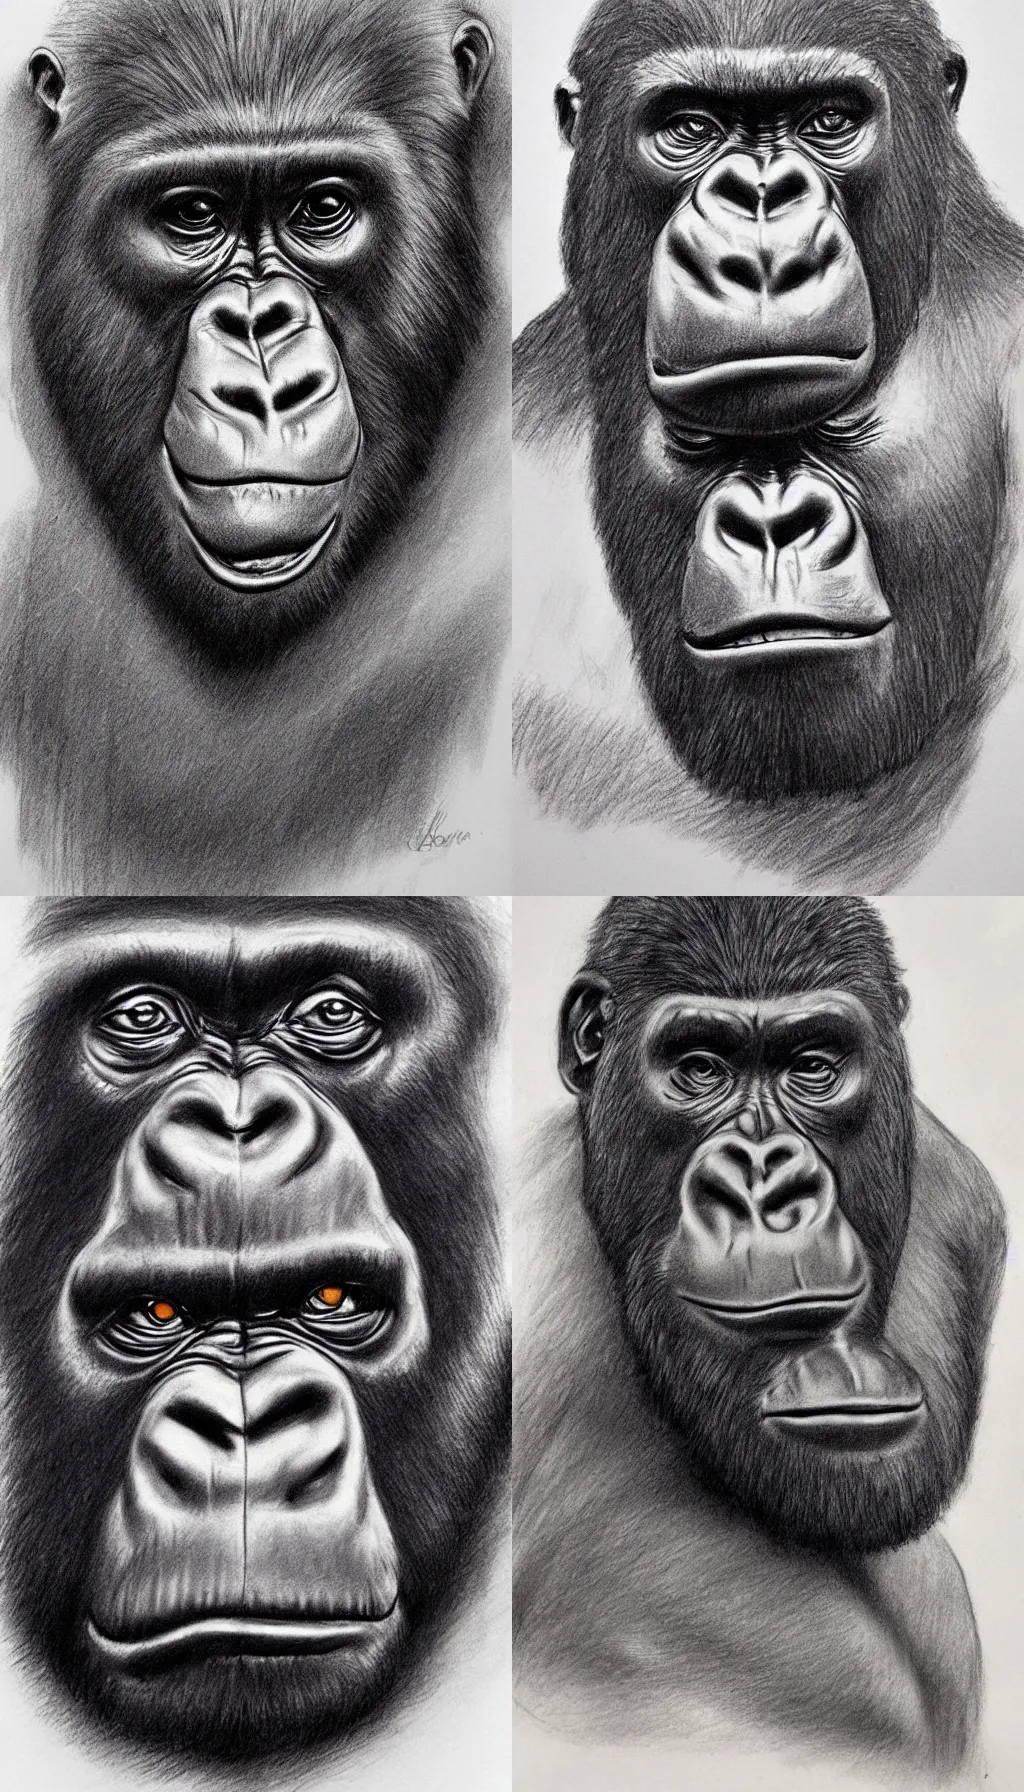 Prompt: facial composite police sketch of a gorilla, crime suspect sketch, charcoal sketch